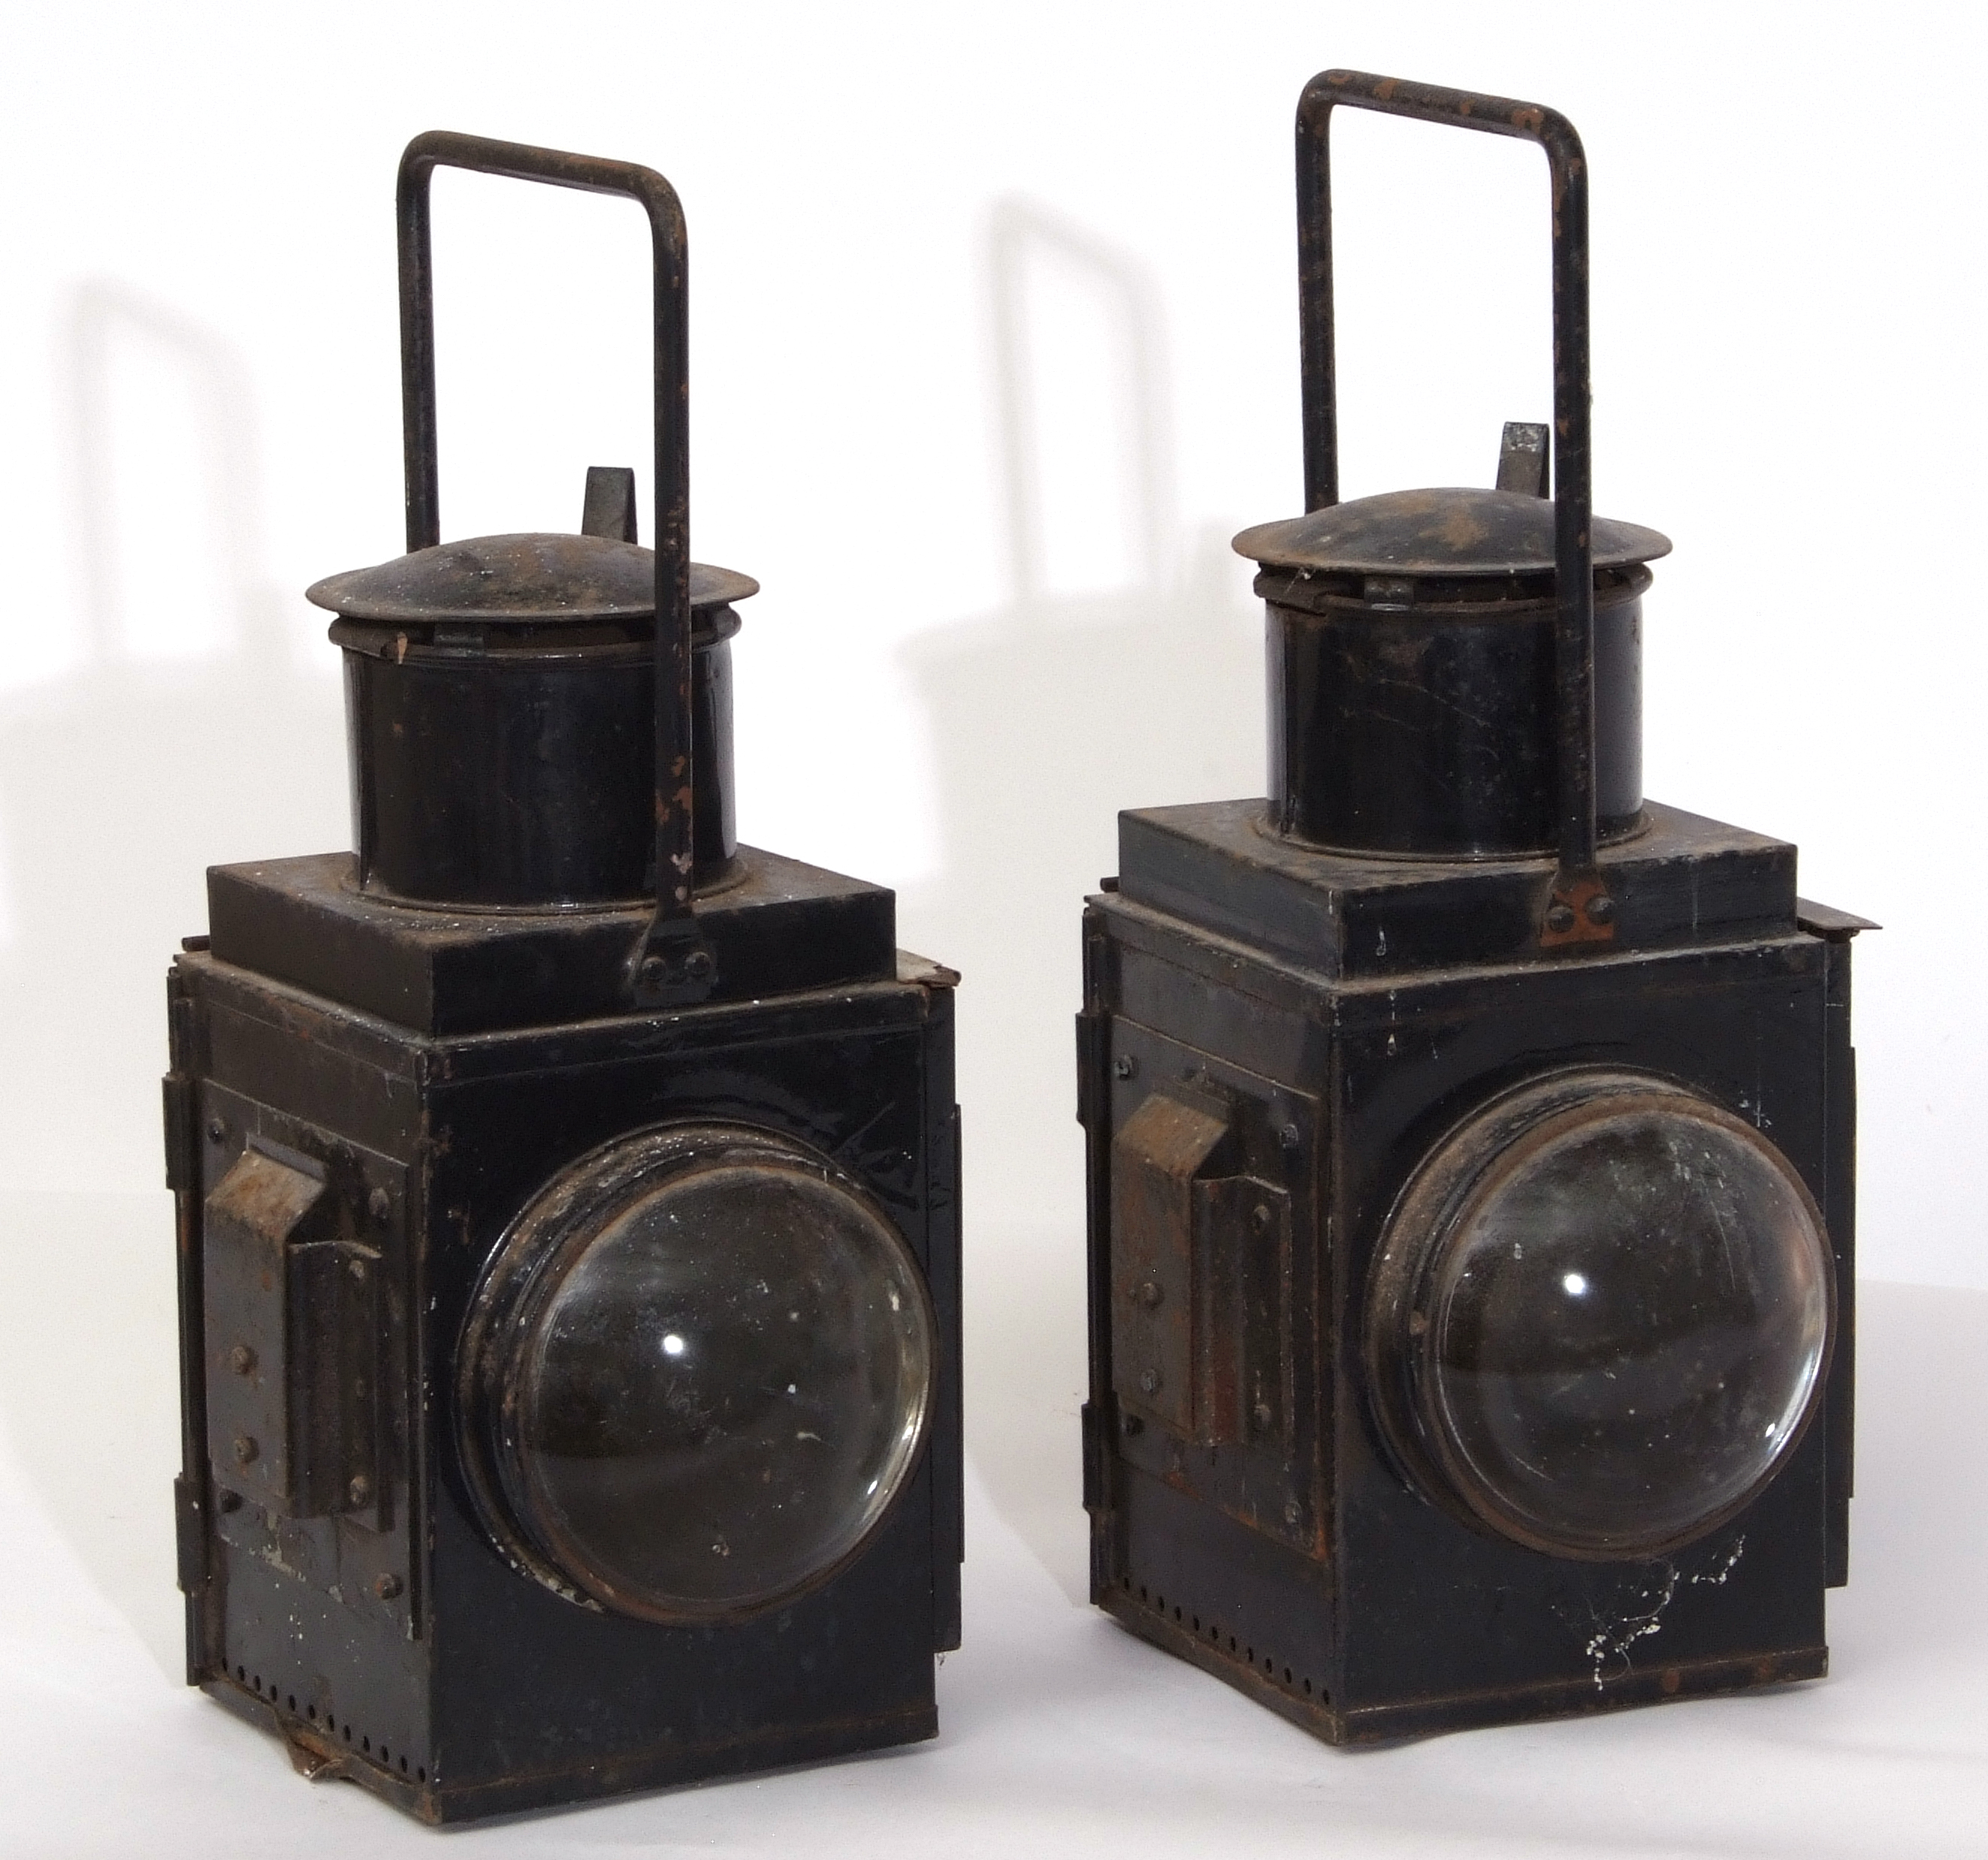 Railway Lamps: Pair of black BR 2-aspect lamps 46cm high, each with 2 x clear bullseye lenses.